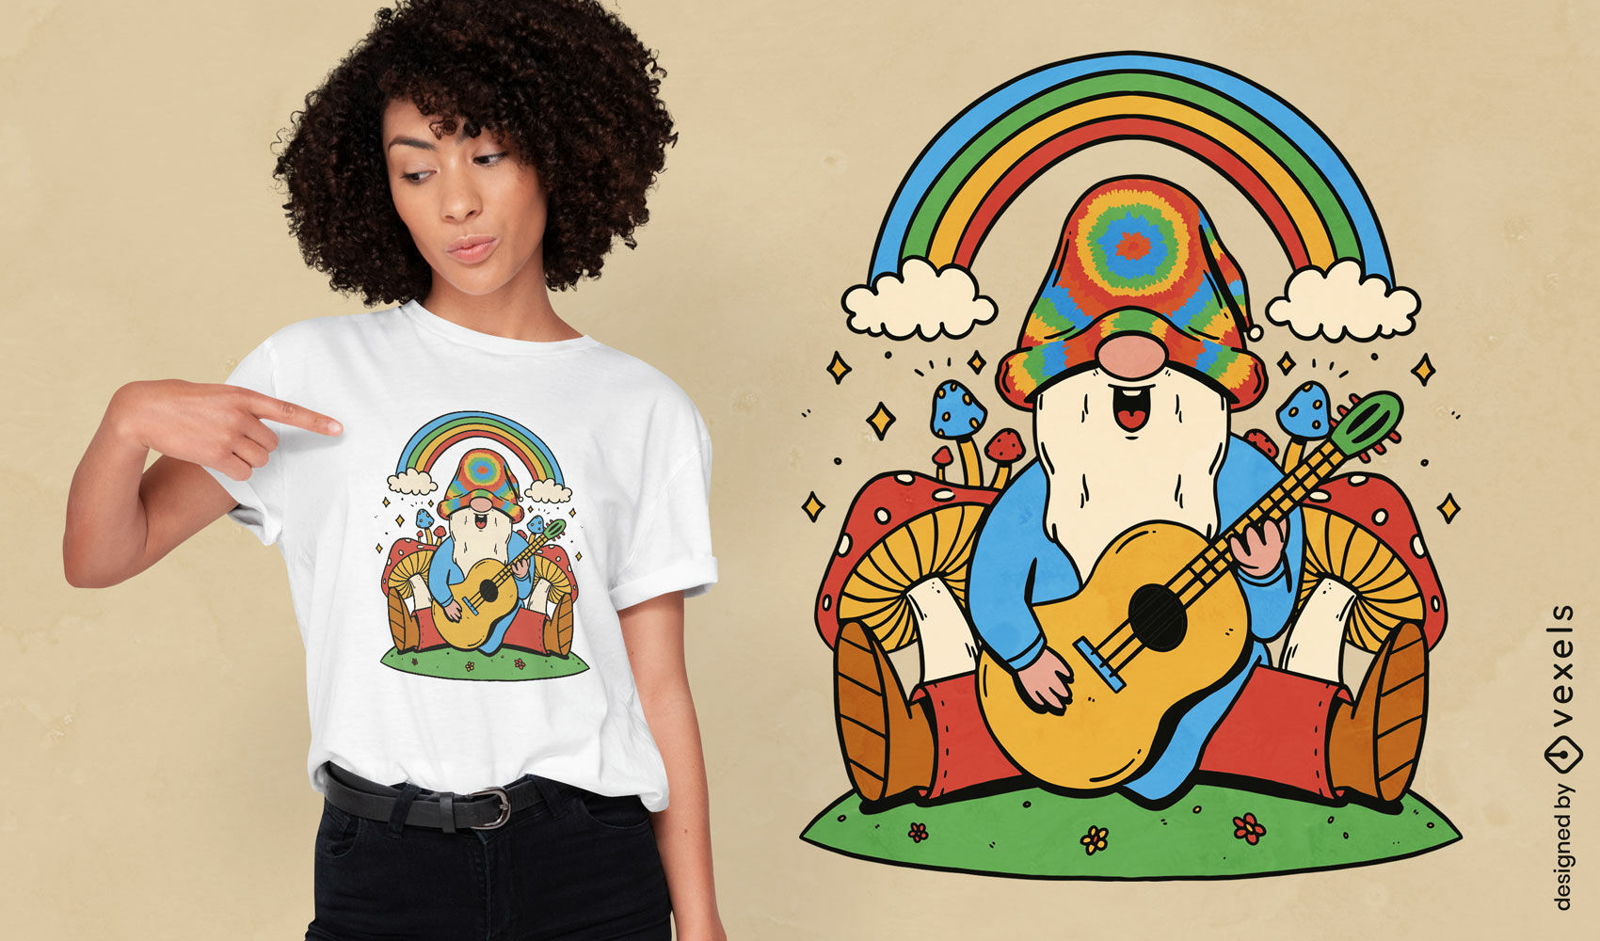 Hippie playing guitar t-shirt design